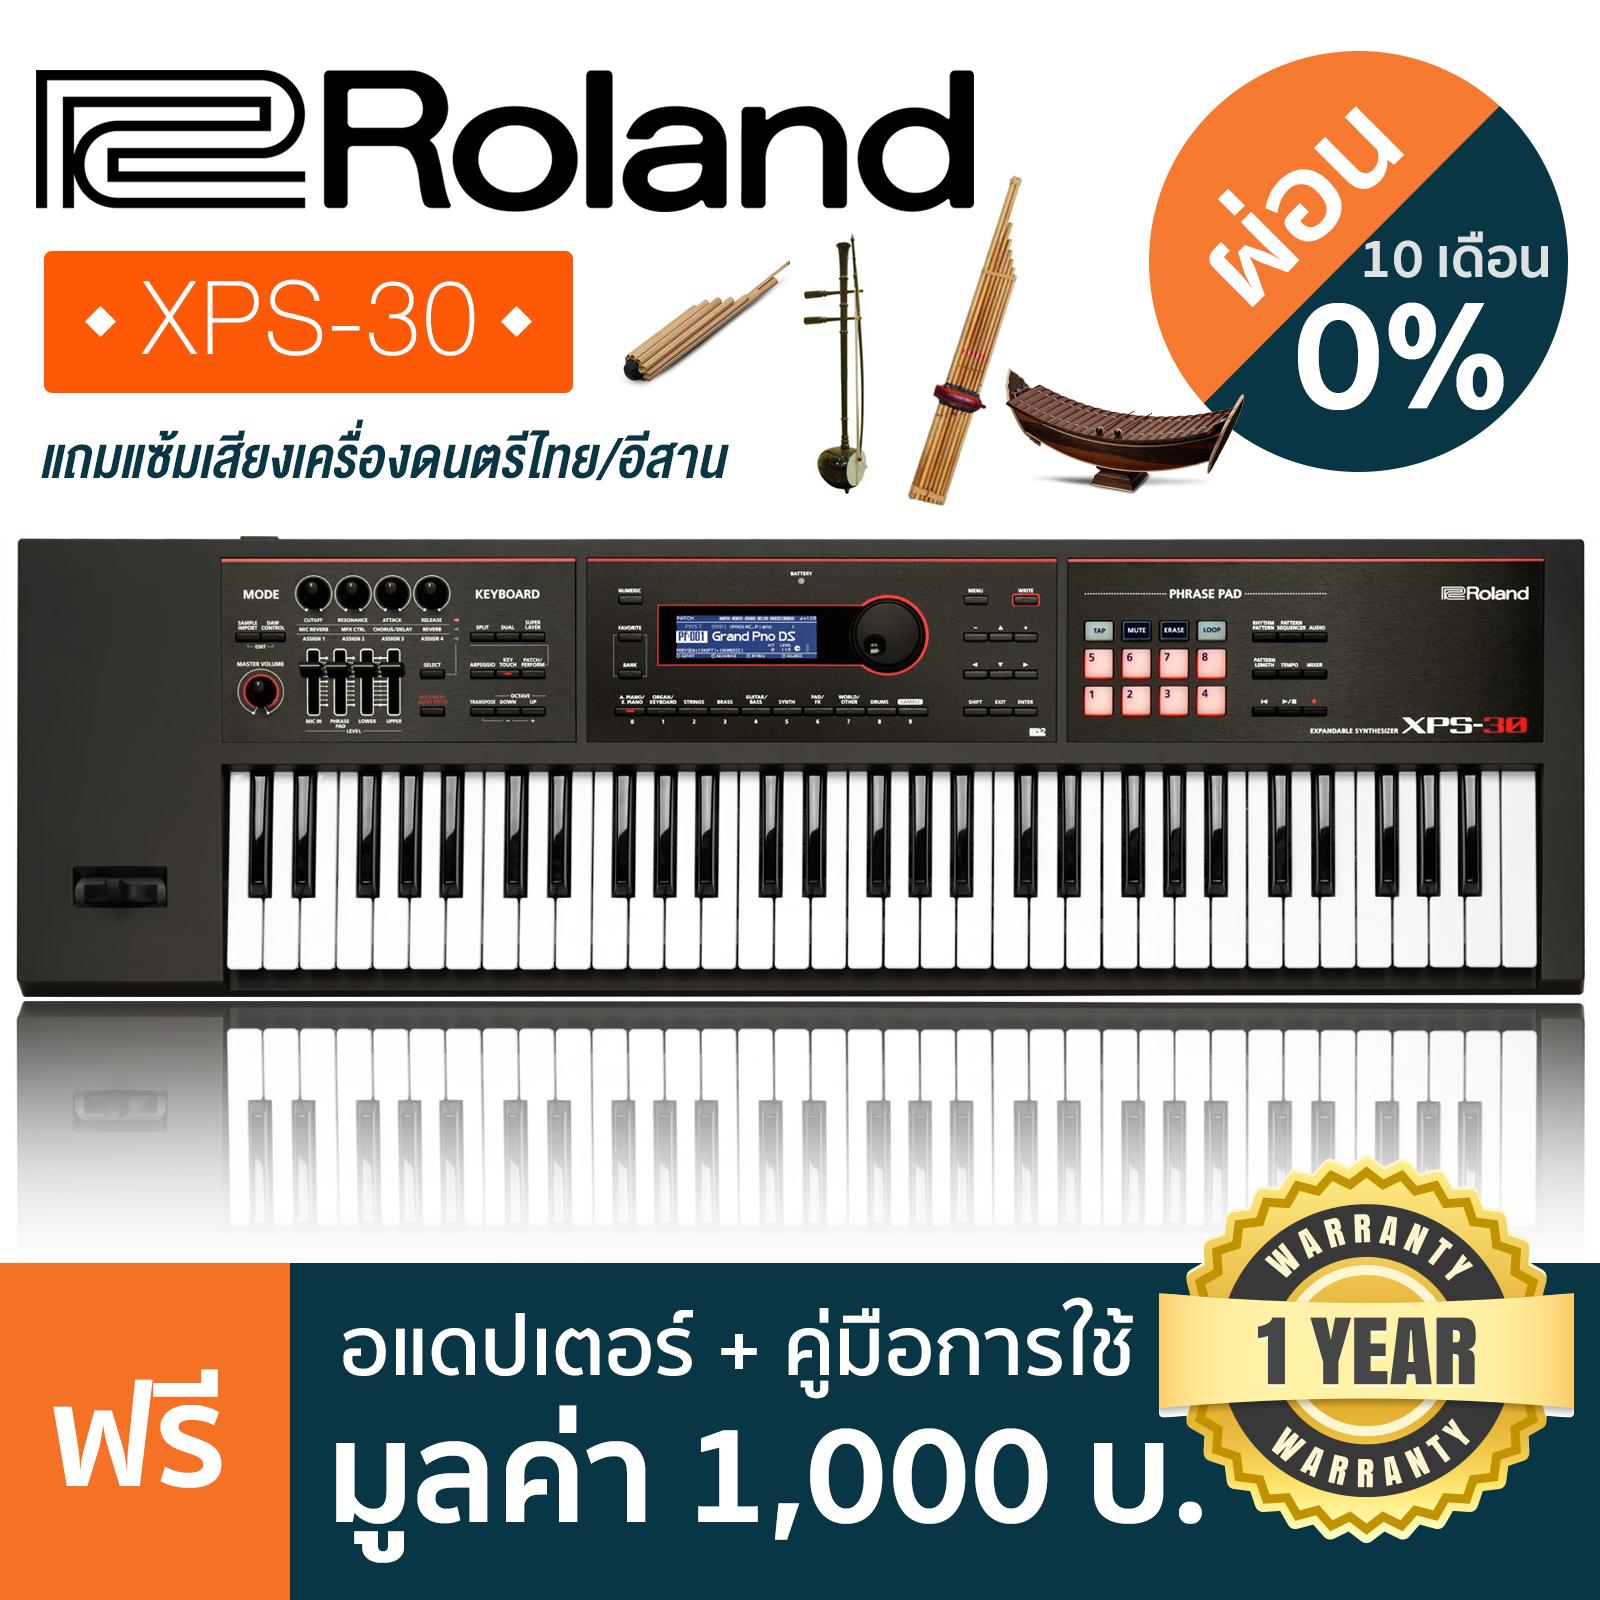 Roland® XPS-30 Synthesizer คีย์บอร์ดซินธีไซเซอร์ 61 คีย์ Patch 1,400 เสียง ลงแซ้มเสียงเครื่องดนตรีอีสานได้ ต่อไมค์ได้พร้อมเอฟเฟคเสียงร้อง ** ประกันศูนย์ 1 ปี **